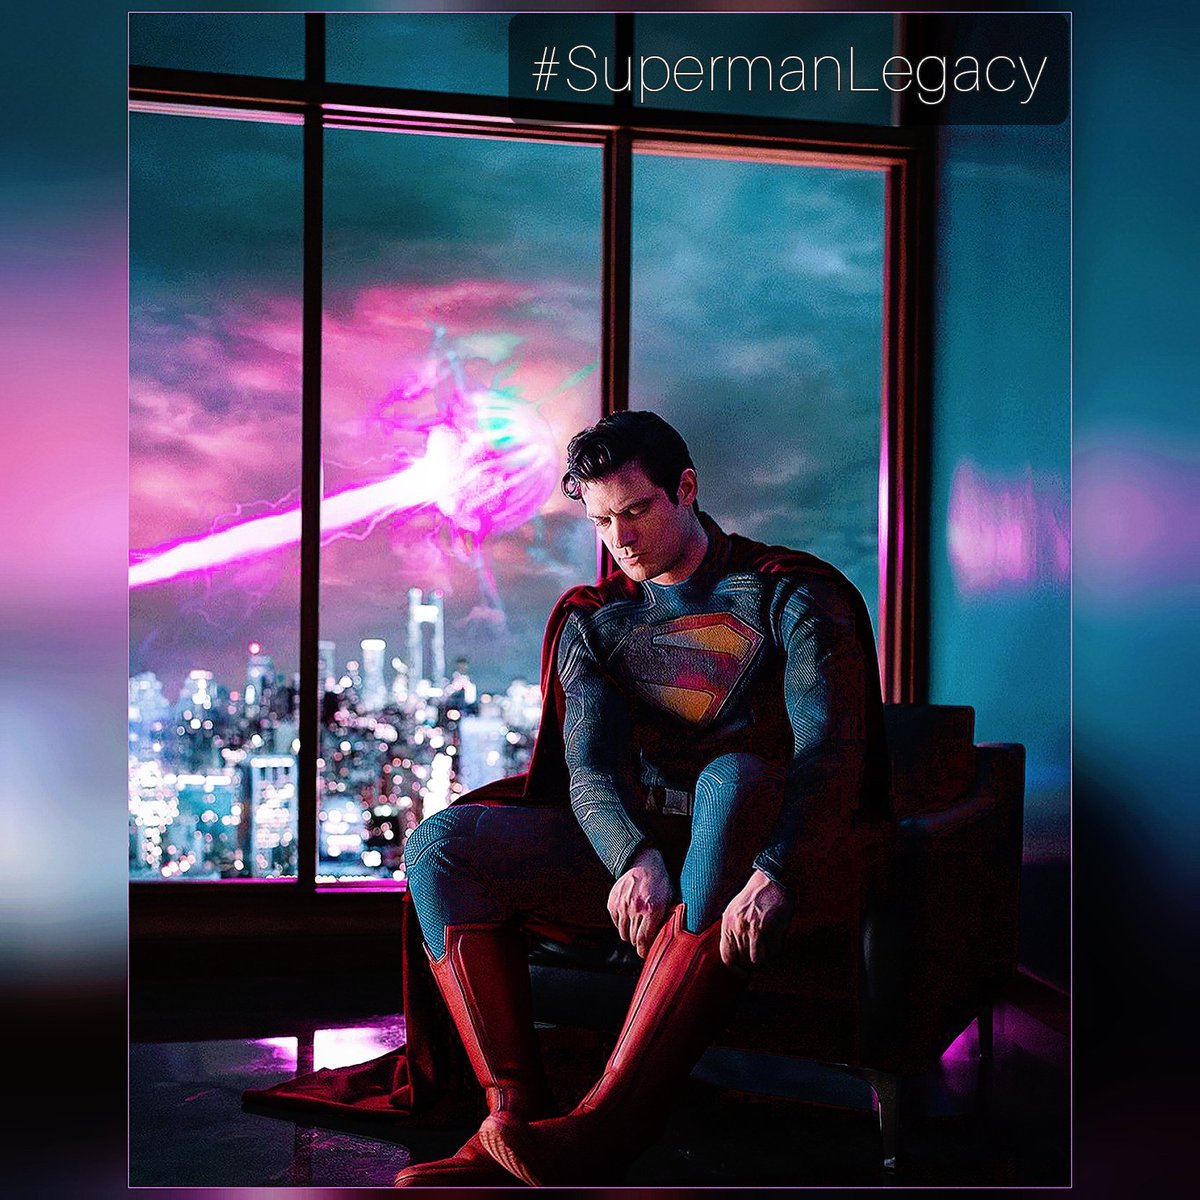 Es increíble 🤩 #SupermanLegacy
#Superman #jamesgunn #davidcorenswet #YSDECR #YaSoyDetectableEnCualquierRadar